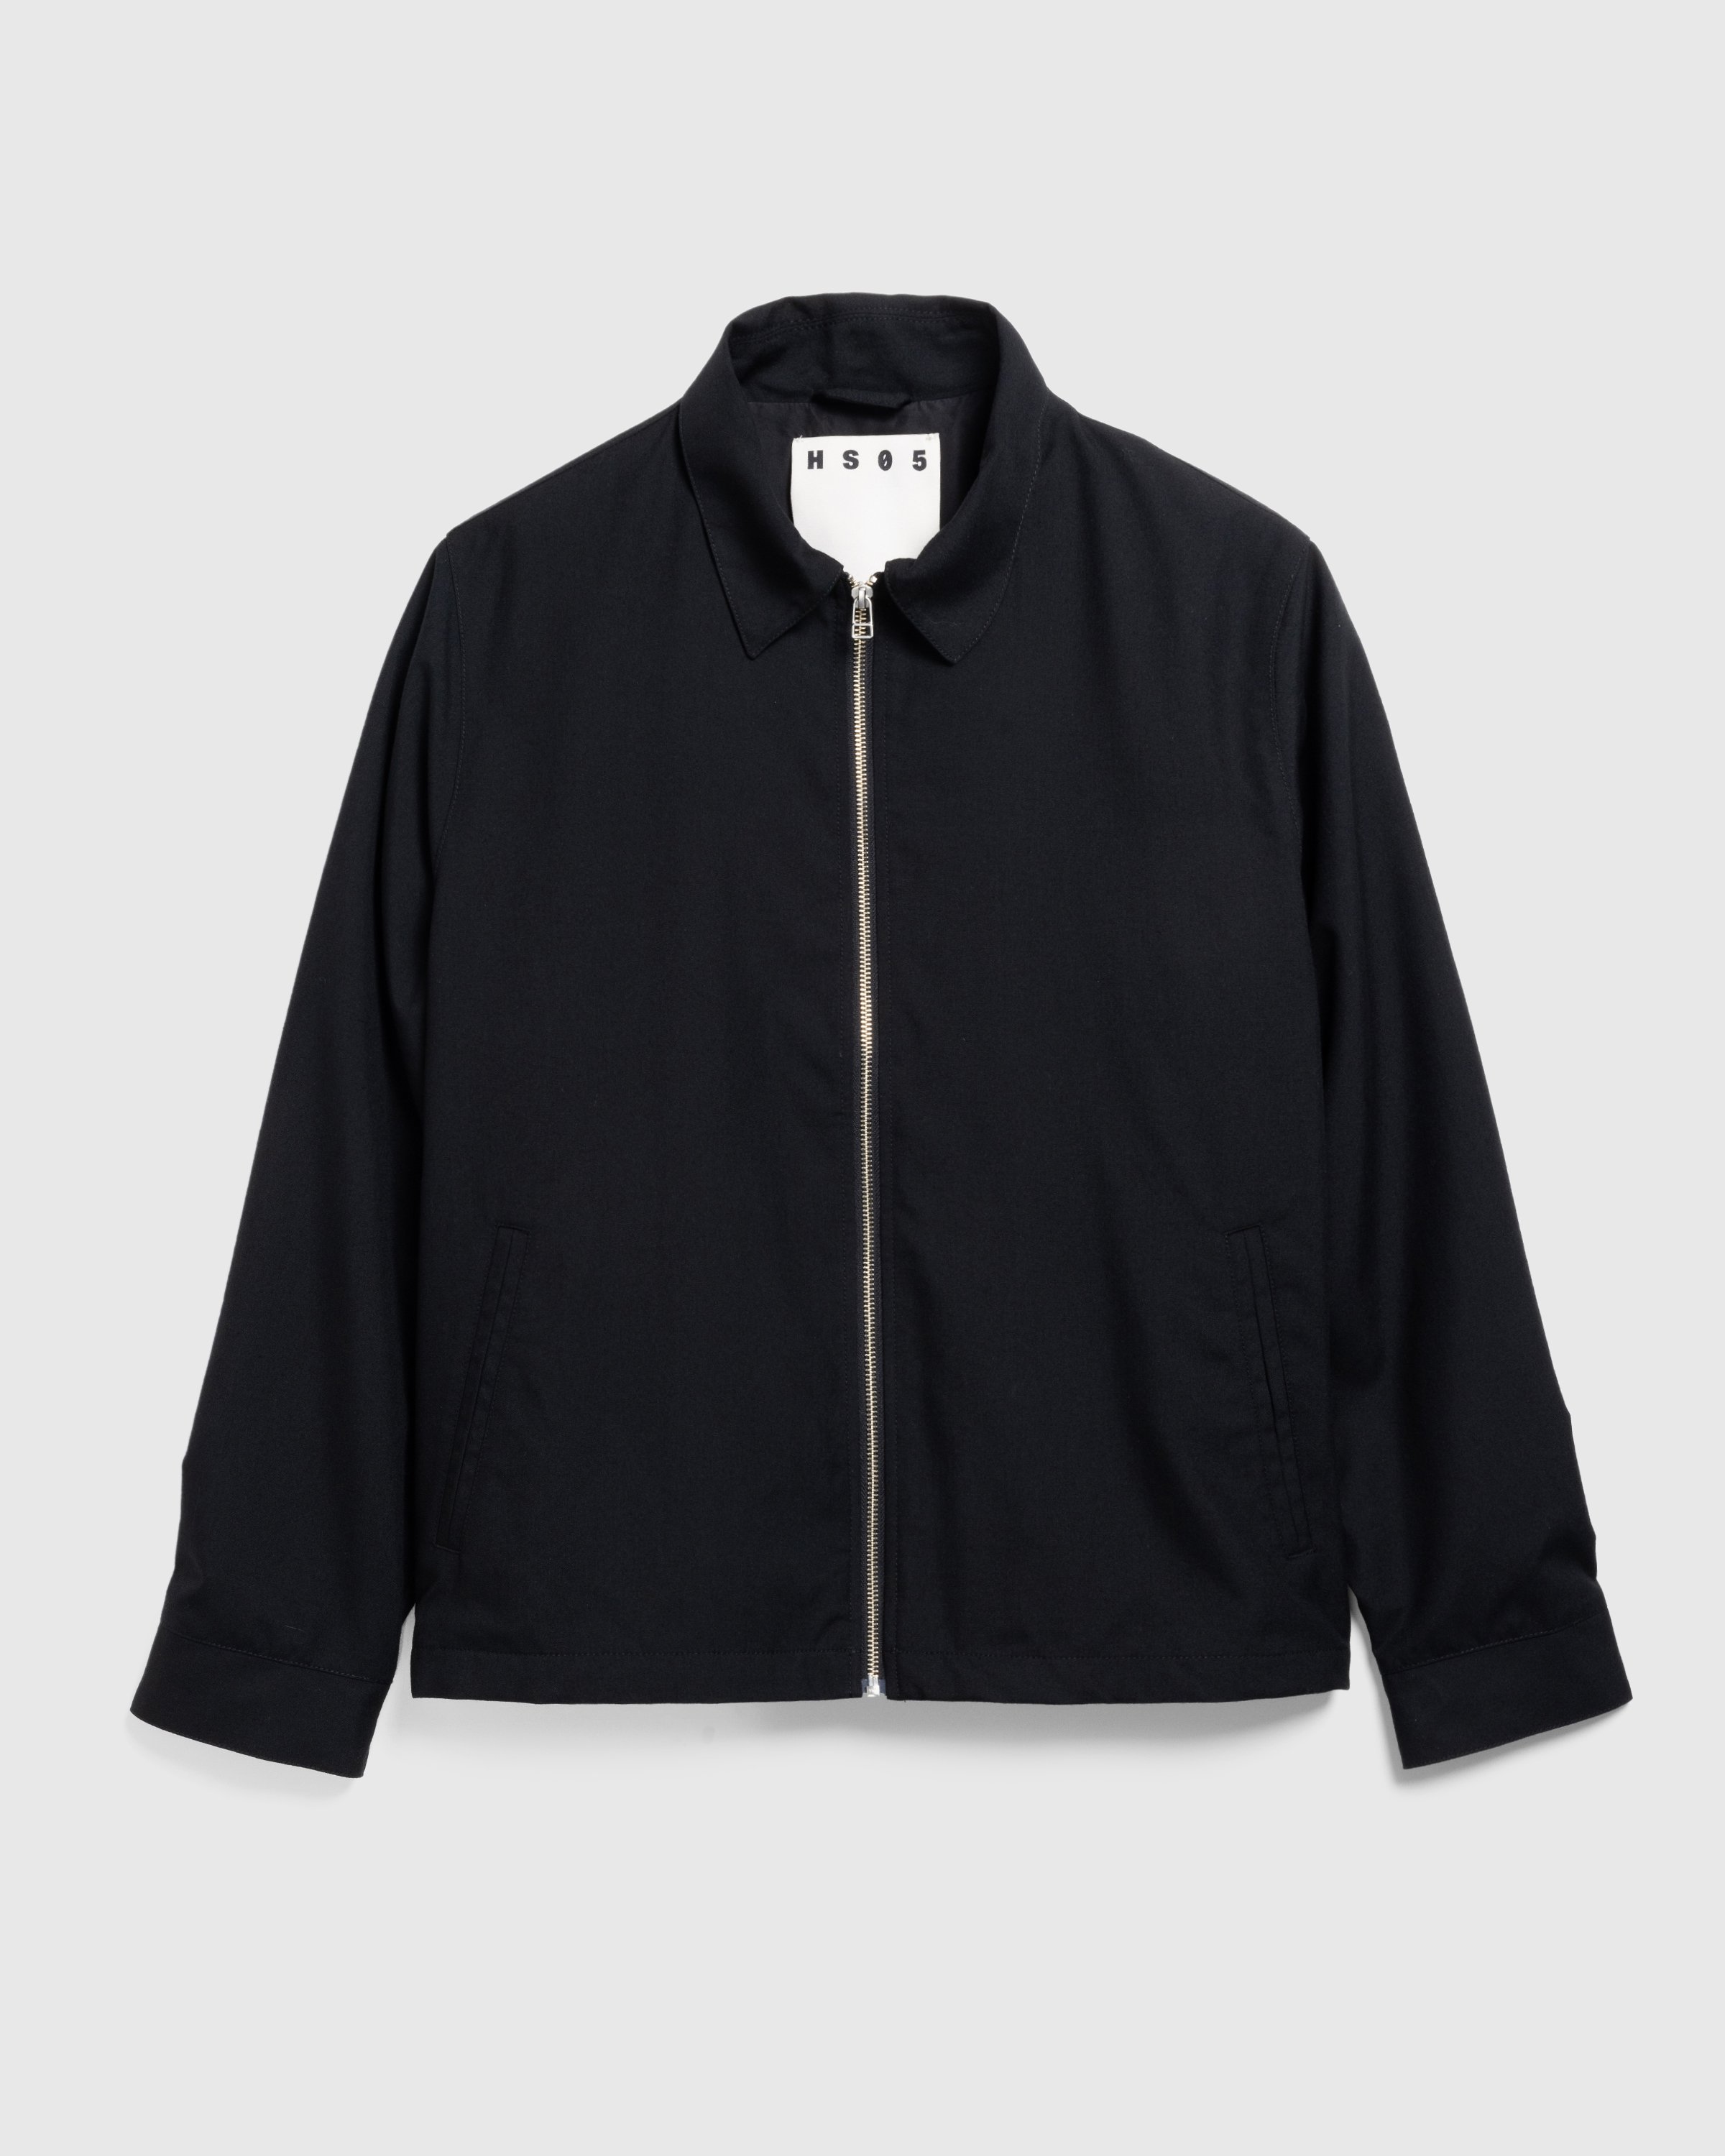 Highsnobiety HS05 - Tropical Suiting Jacket Black - Clothing - Black - Image 1